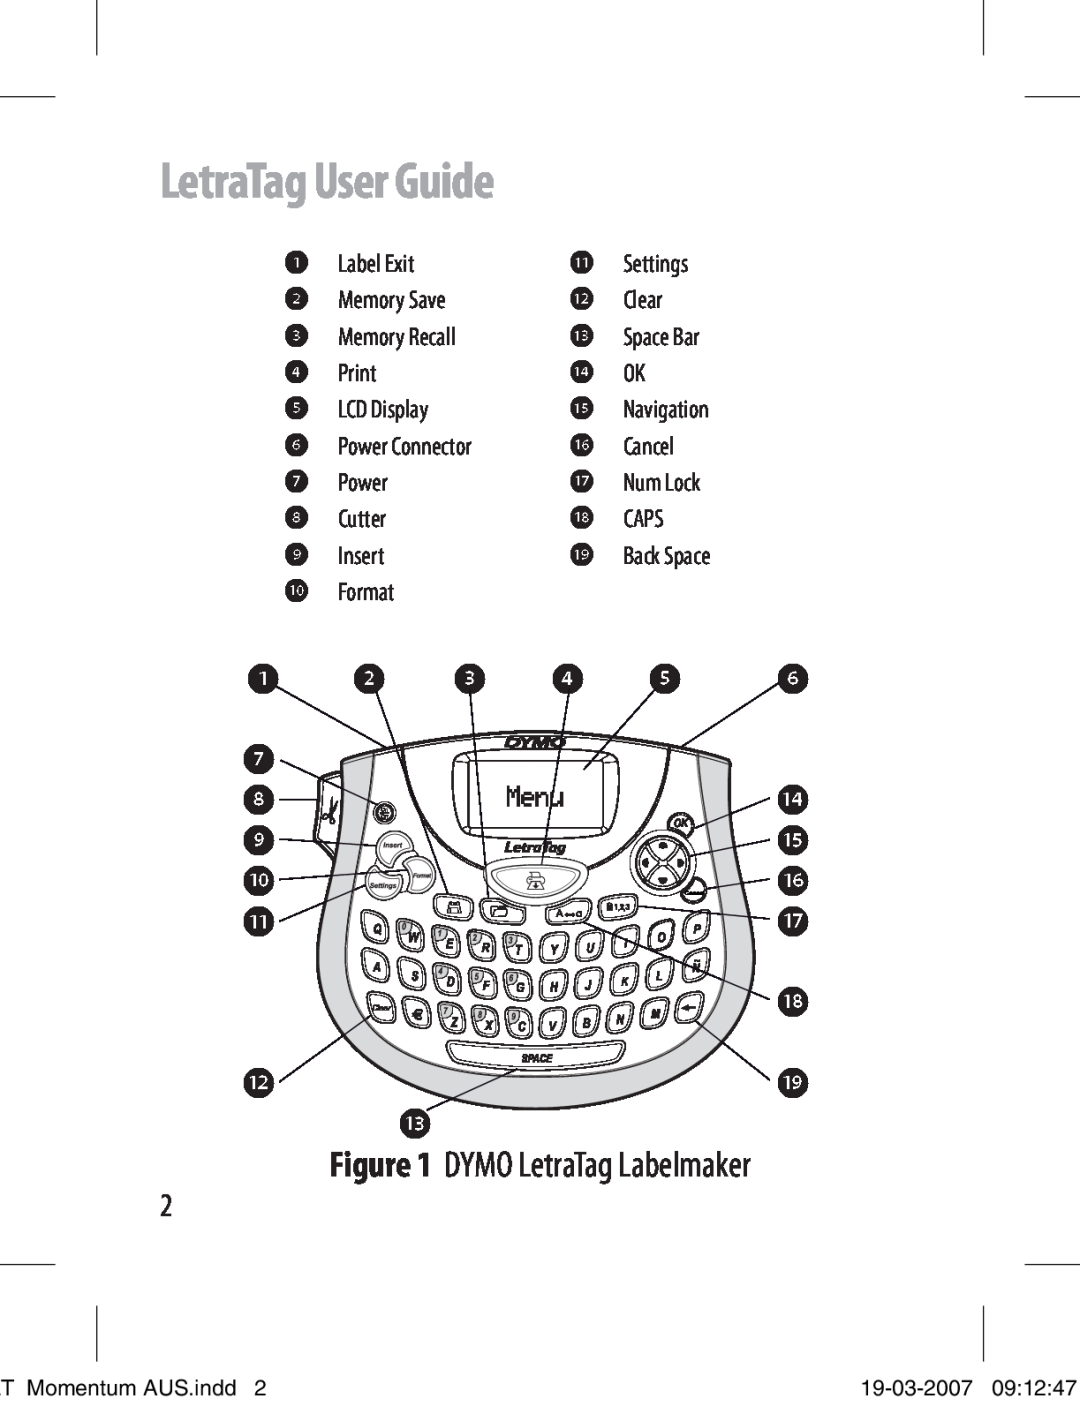 Dymo LT-100T manual DYMO LetraTag Labelmaker, LetraTag User Guide, Æ ß ∞ ± 